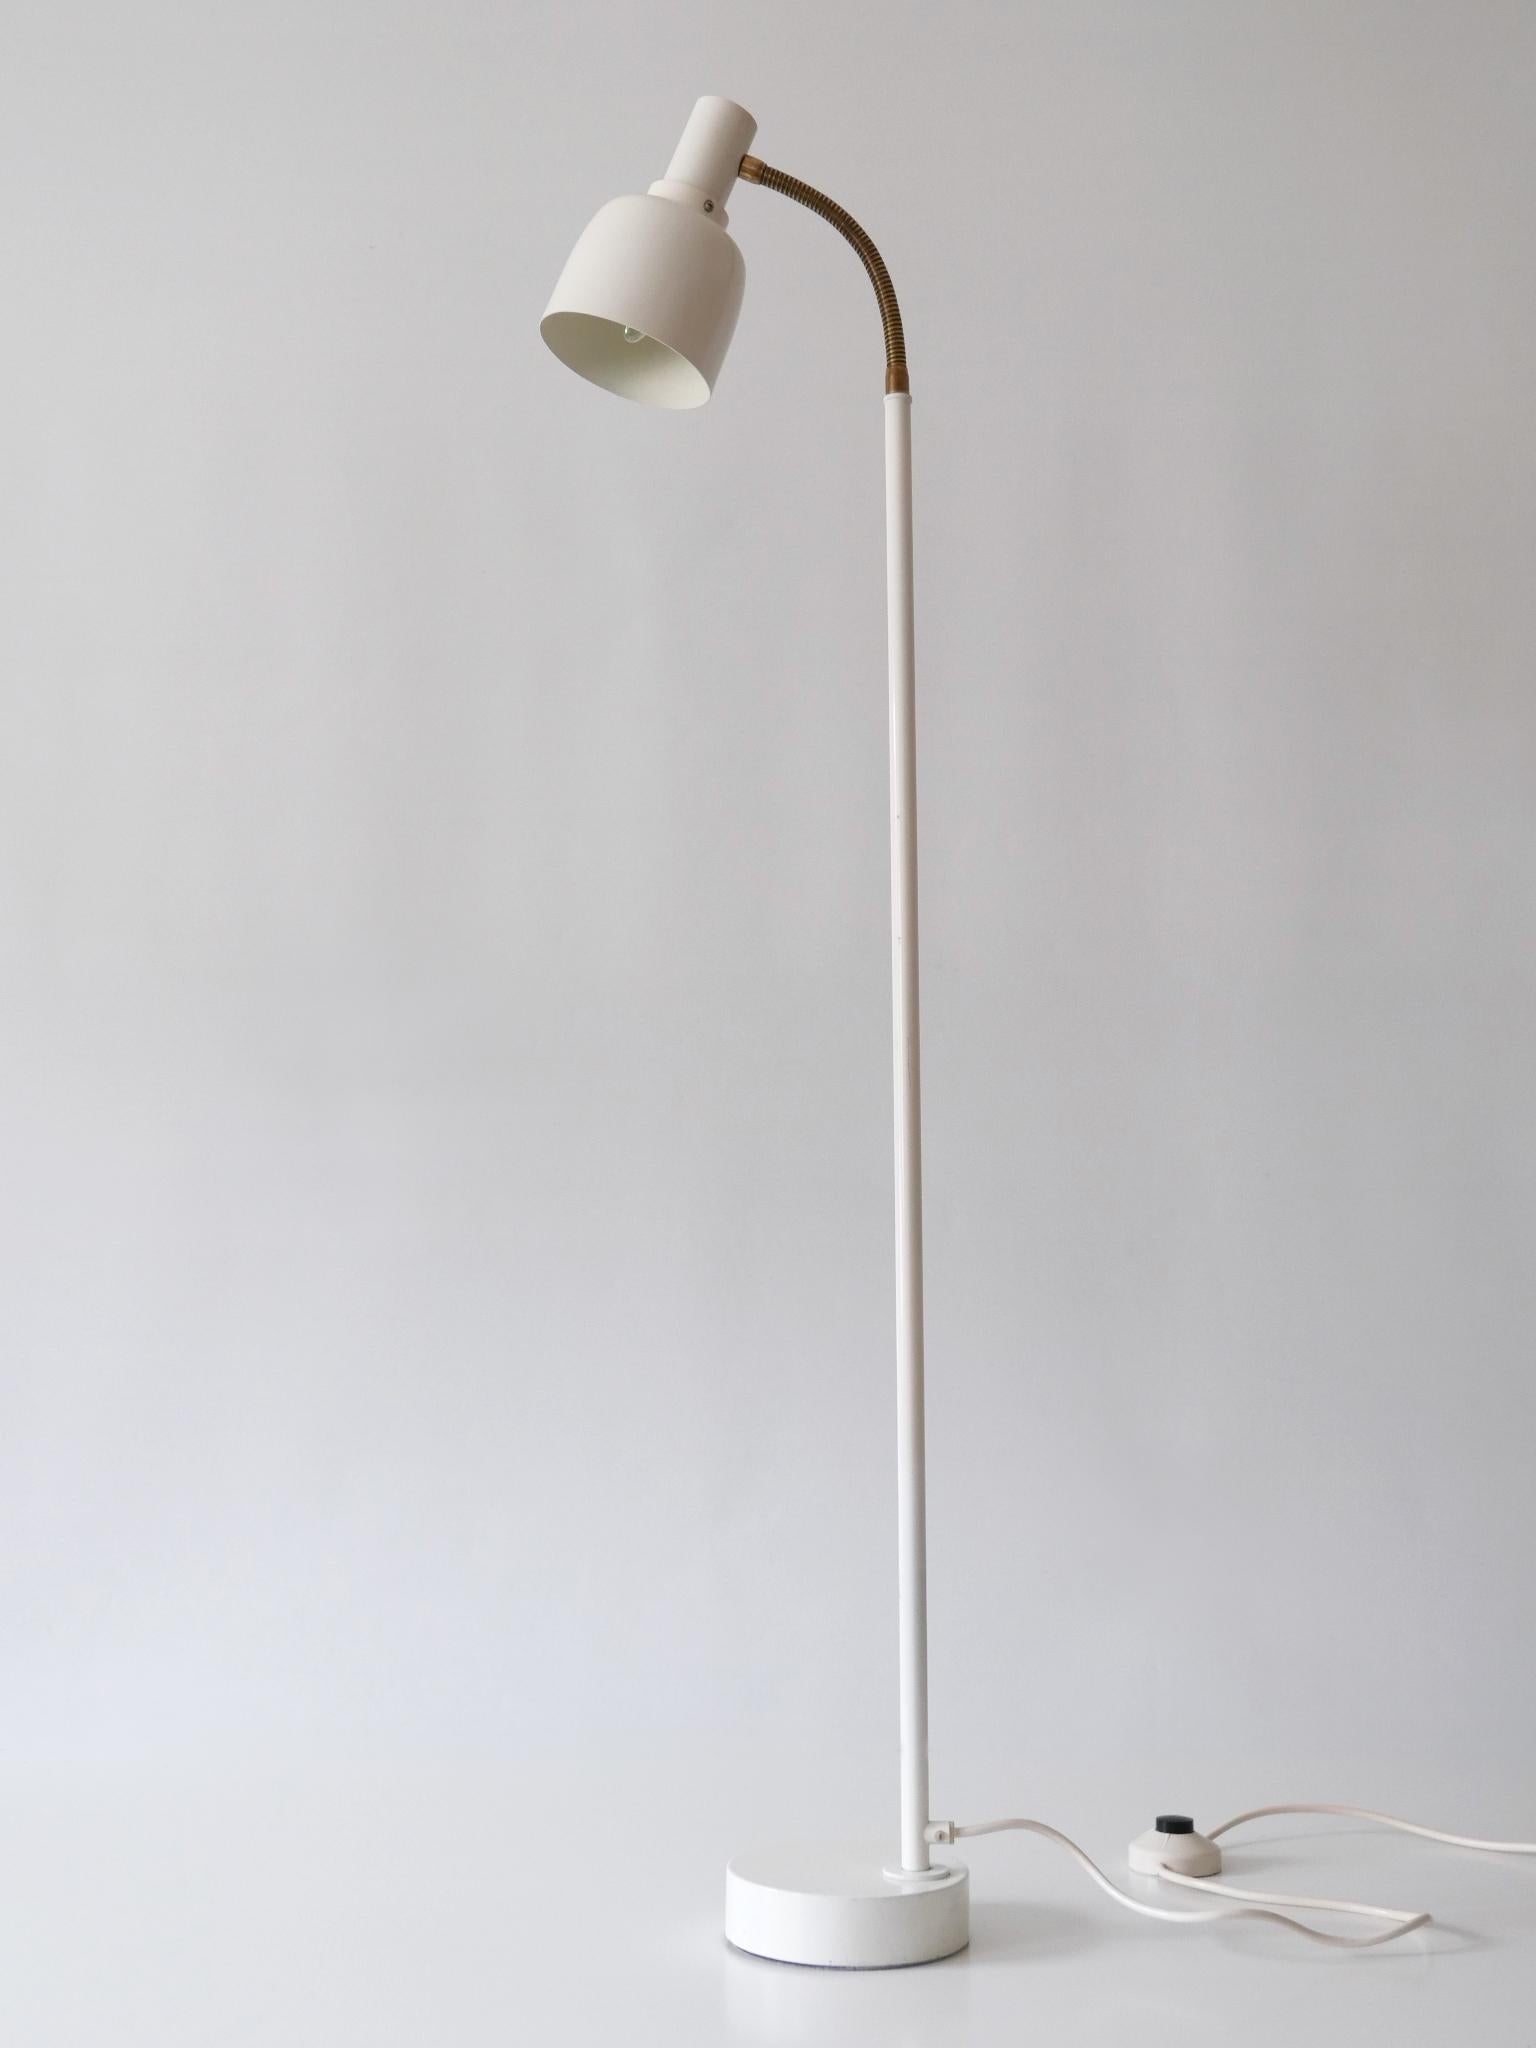 Rare Mid-Century Modern Floor Lamp or Reading Light by Hans-Agne Jakobsson 1960s For Sale 3